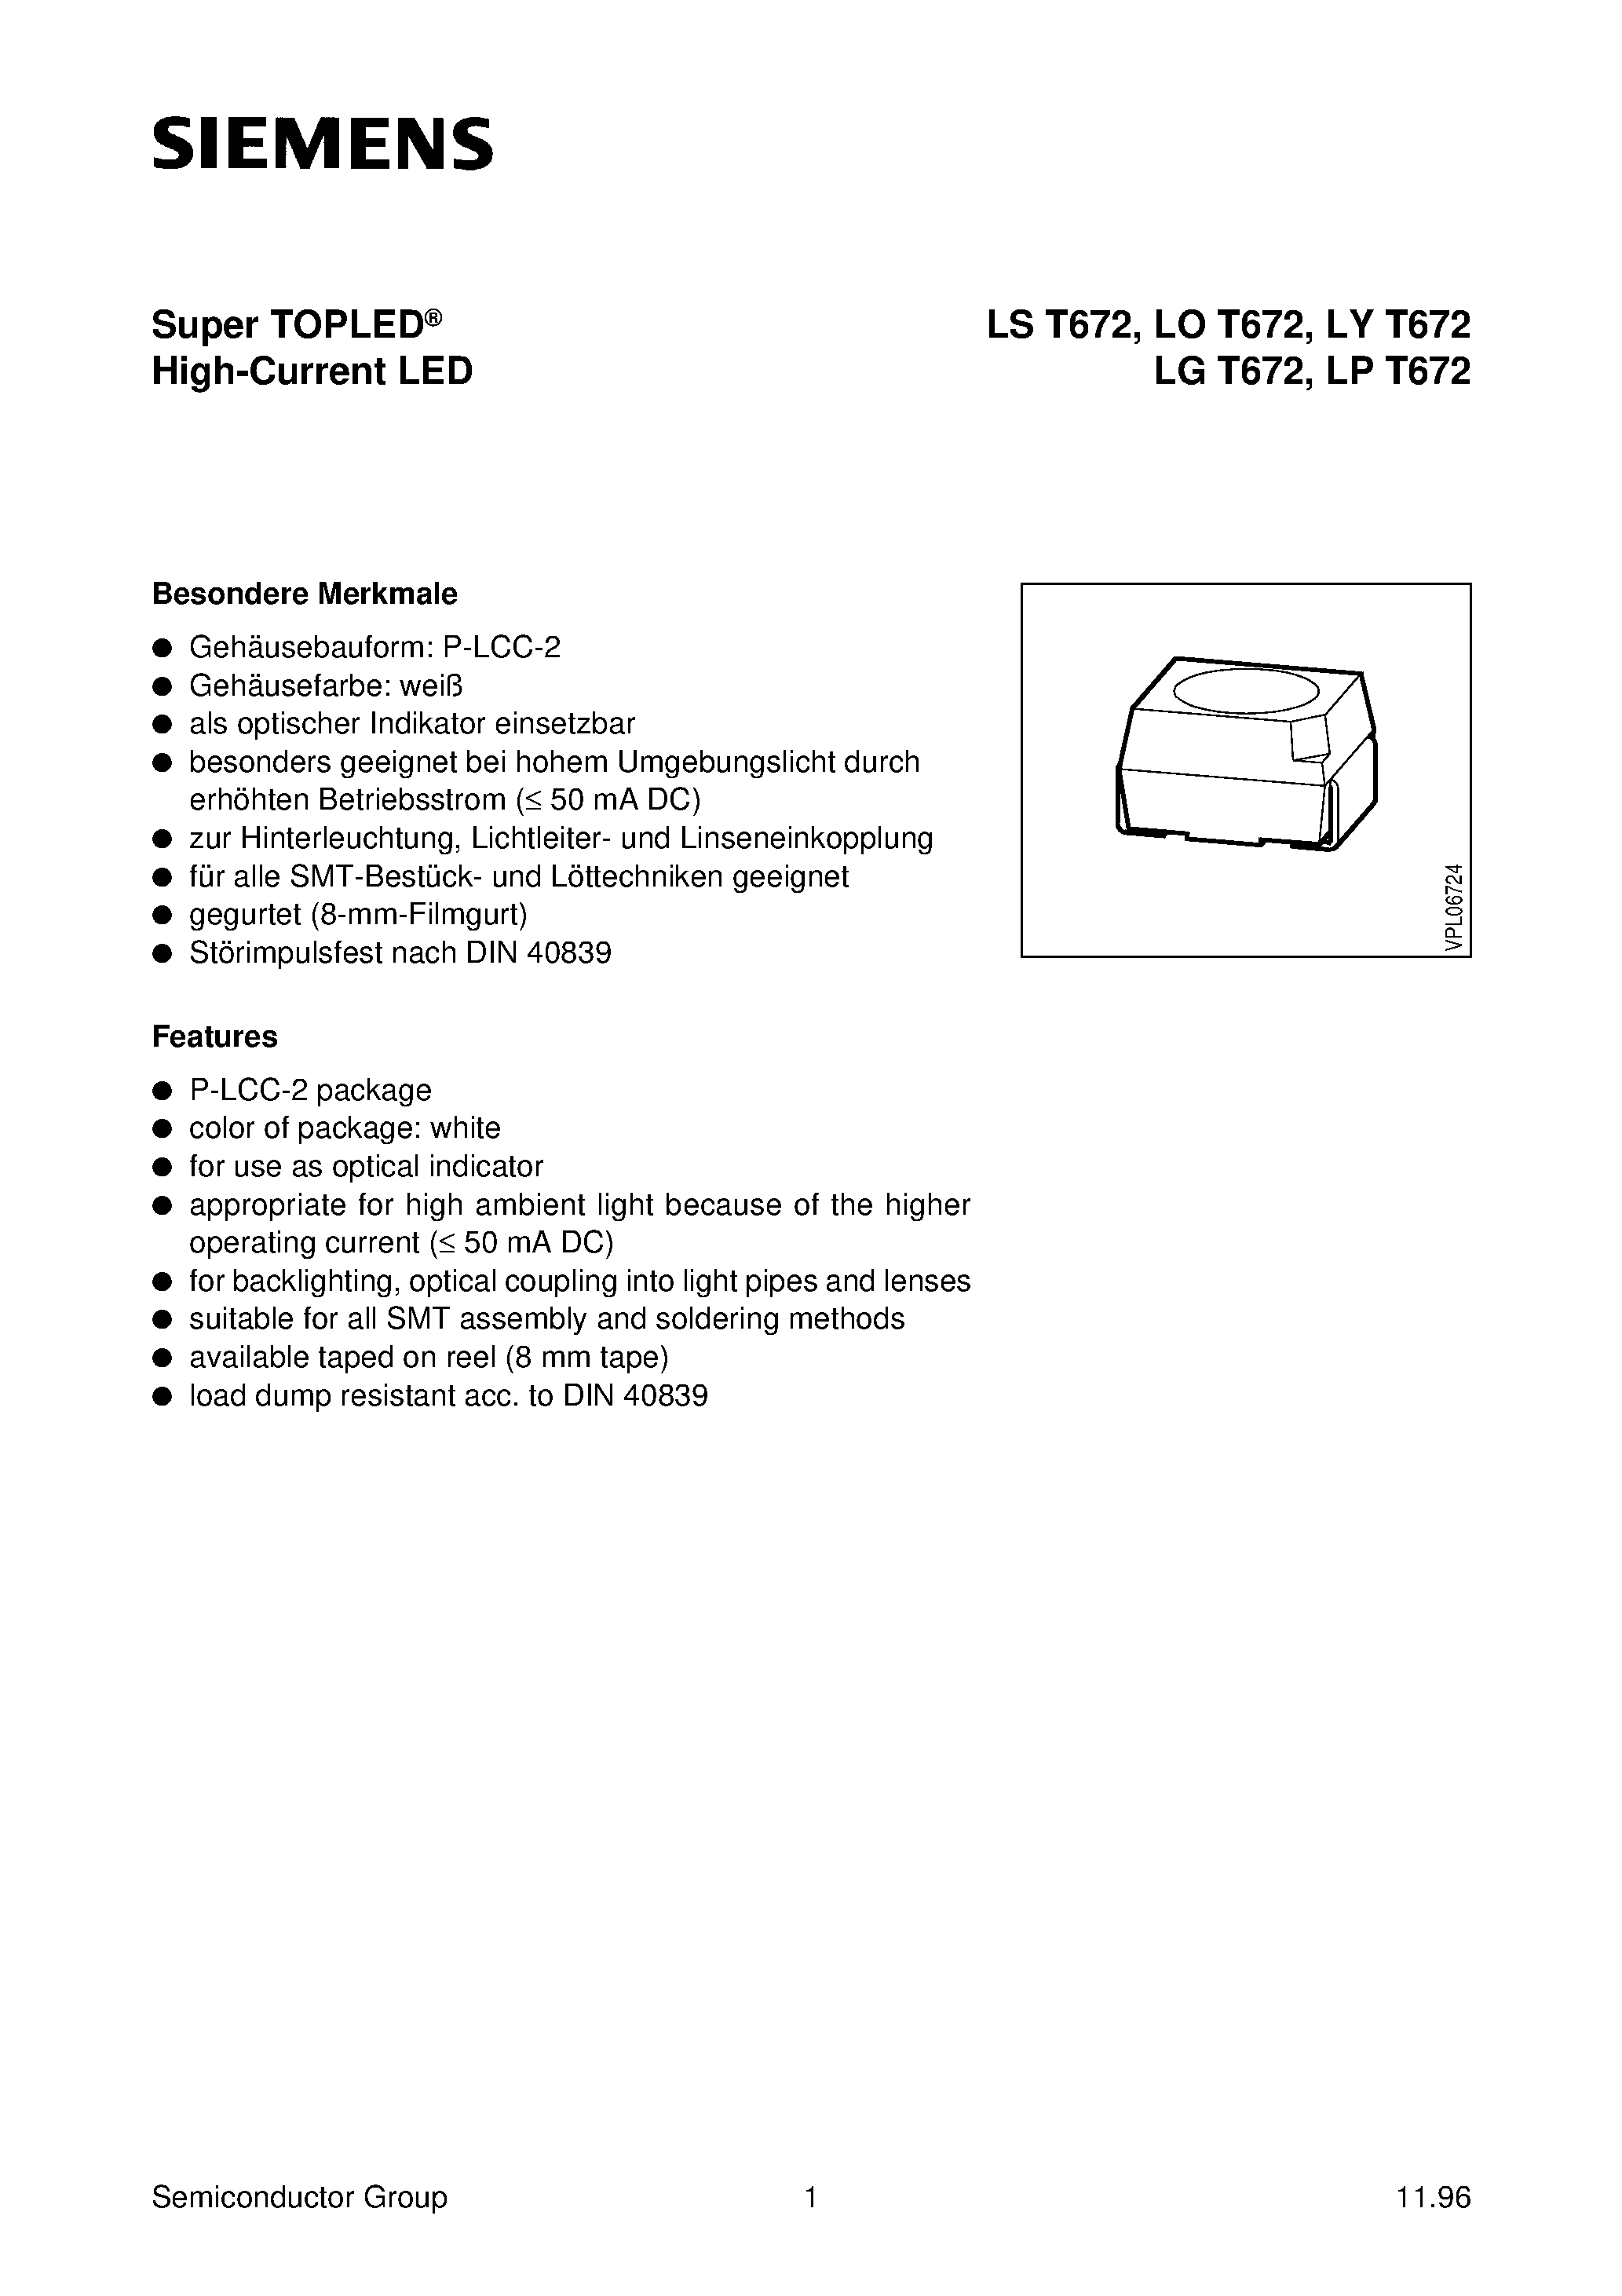 Datasheet LPT672-N - Super TOPLED High-Current LED page 1